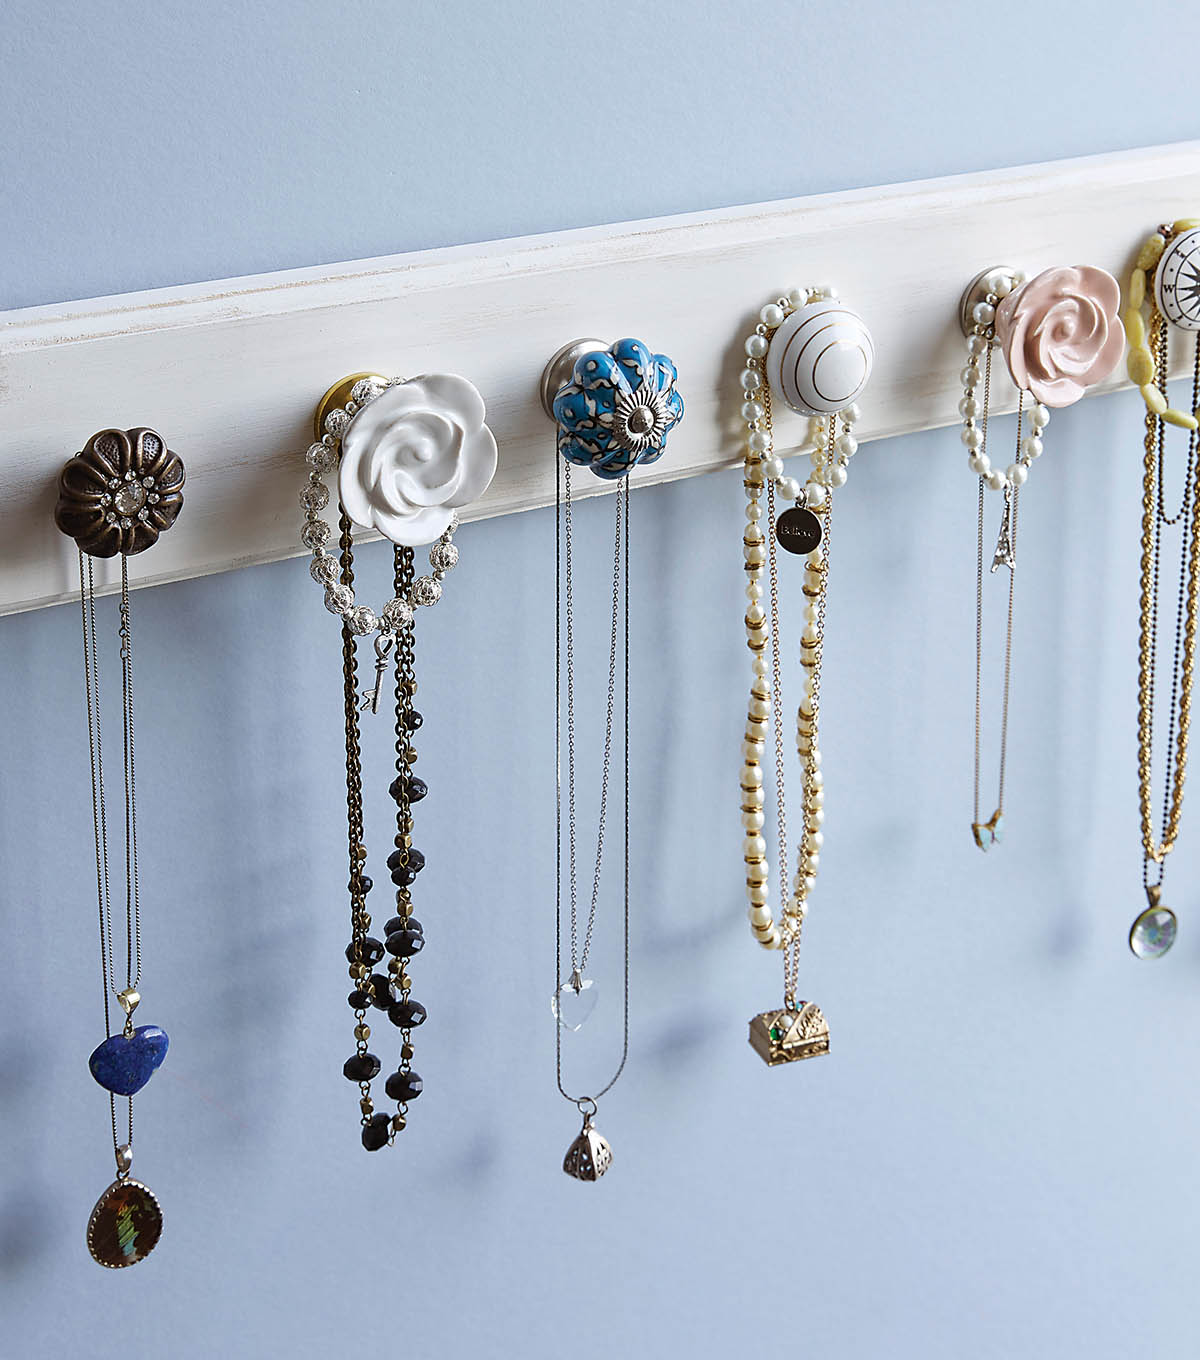 How To Make A Dresser Knob Jewelry Hanger Joann